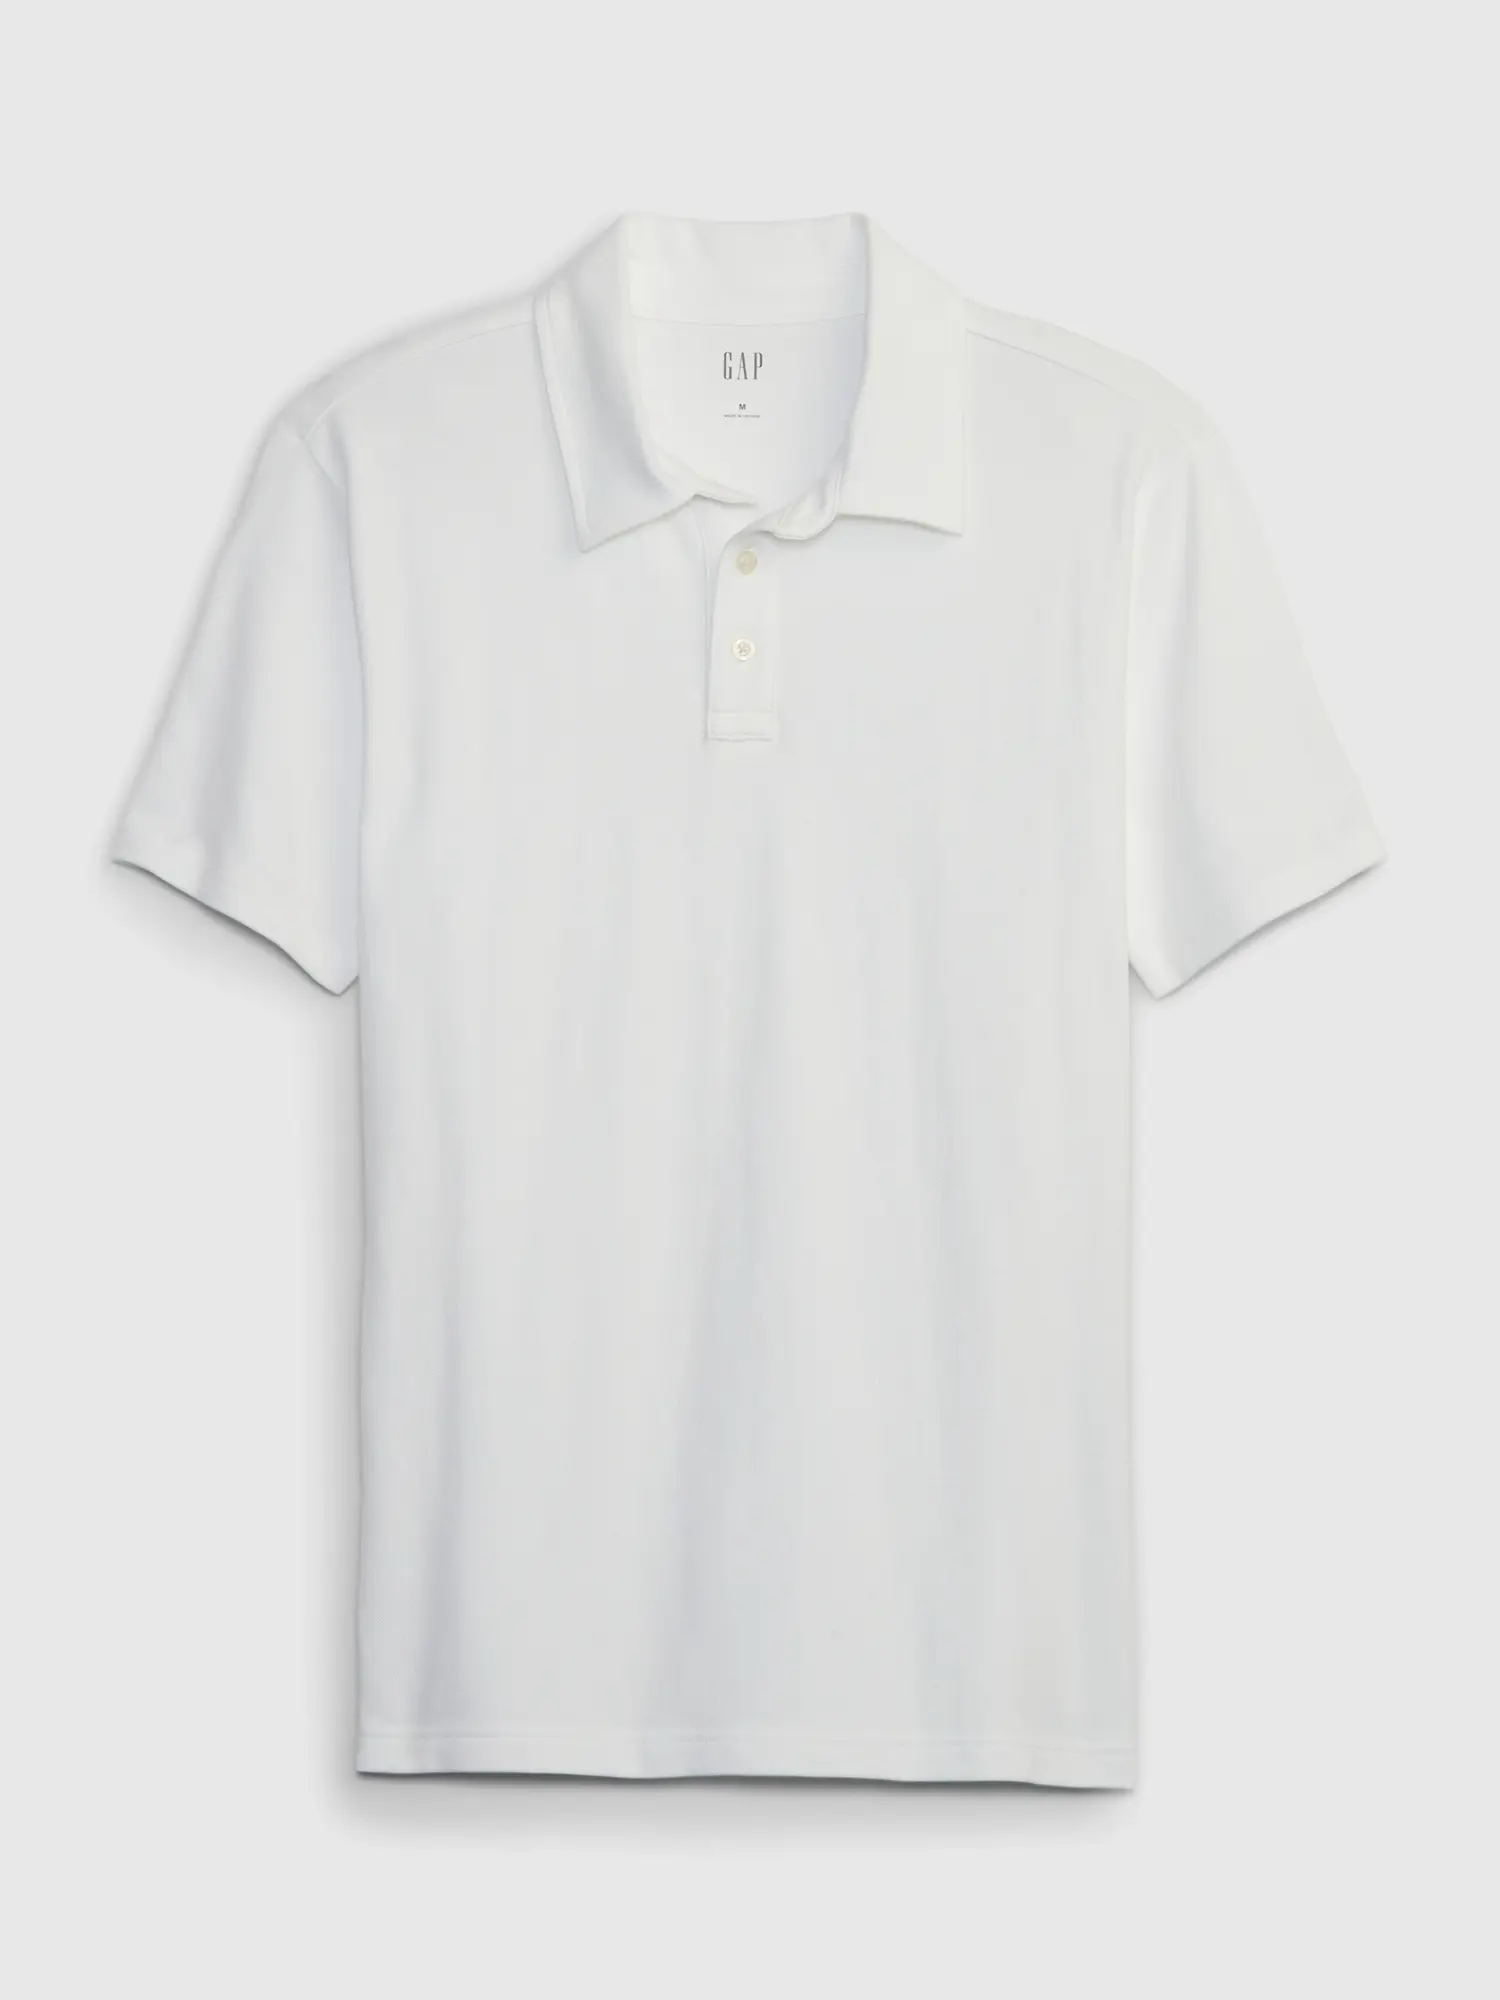 Gap Refined Pique Polo Shirt white. 1